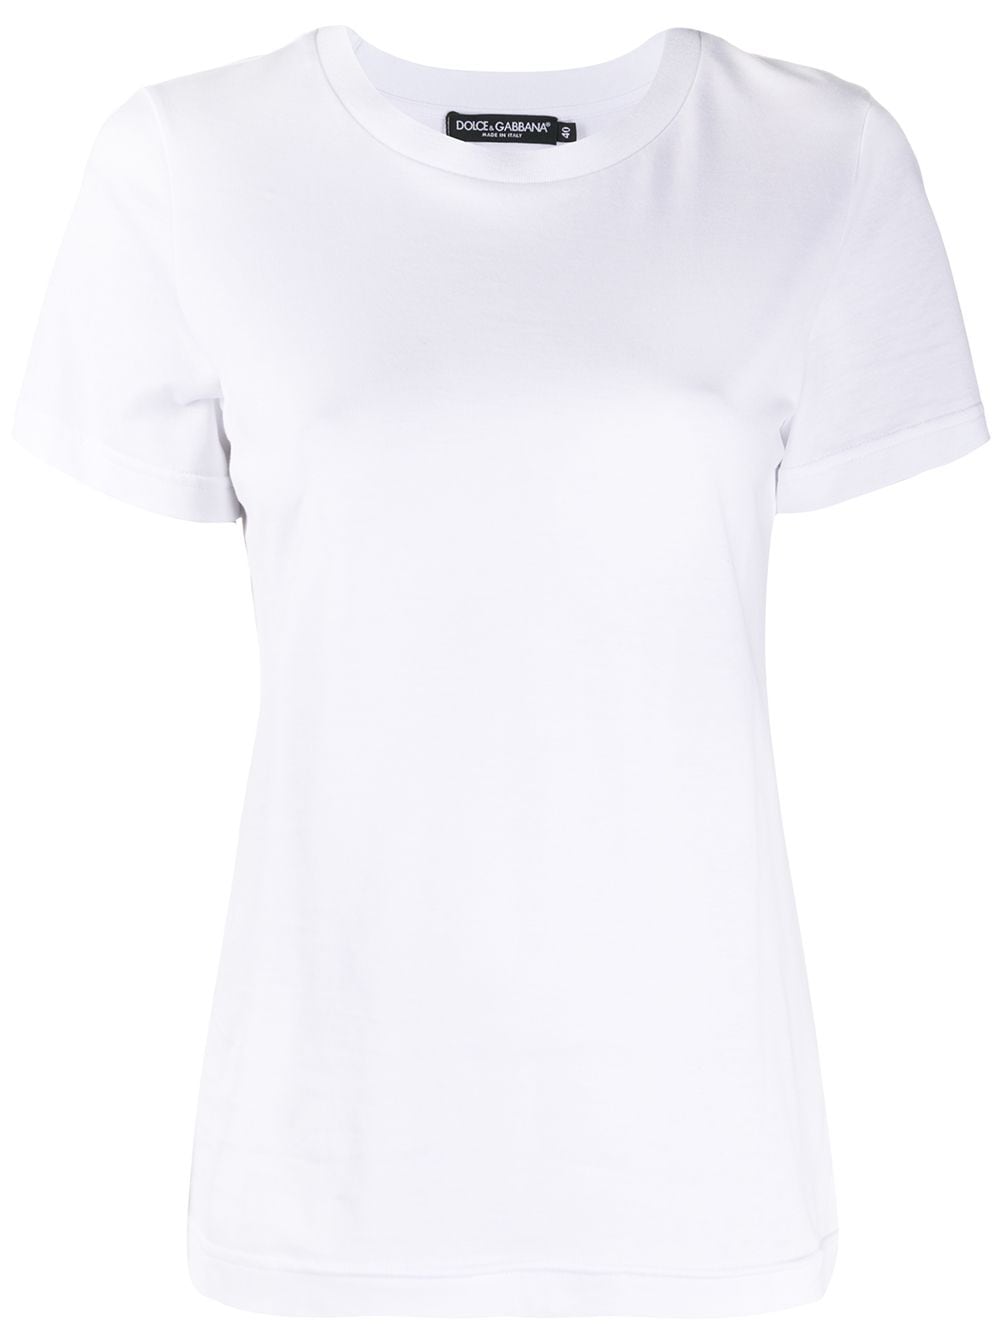 Dolce & Gabbana Embroidered Logo Cotton T-shirt - Farfetch